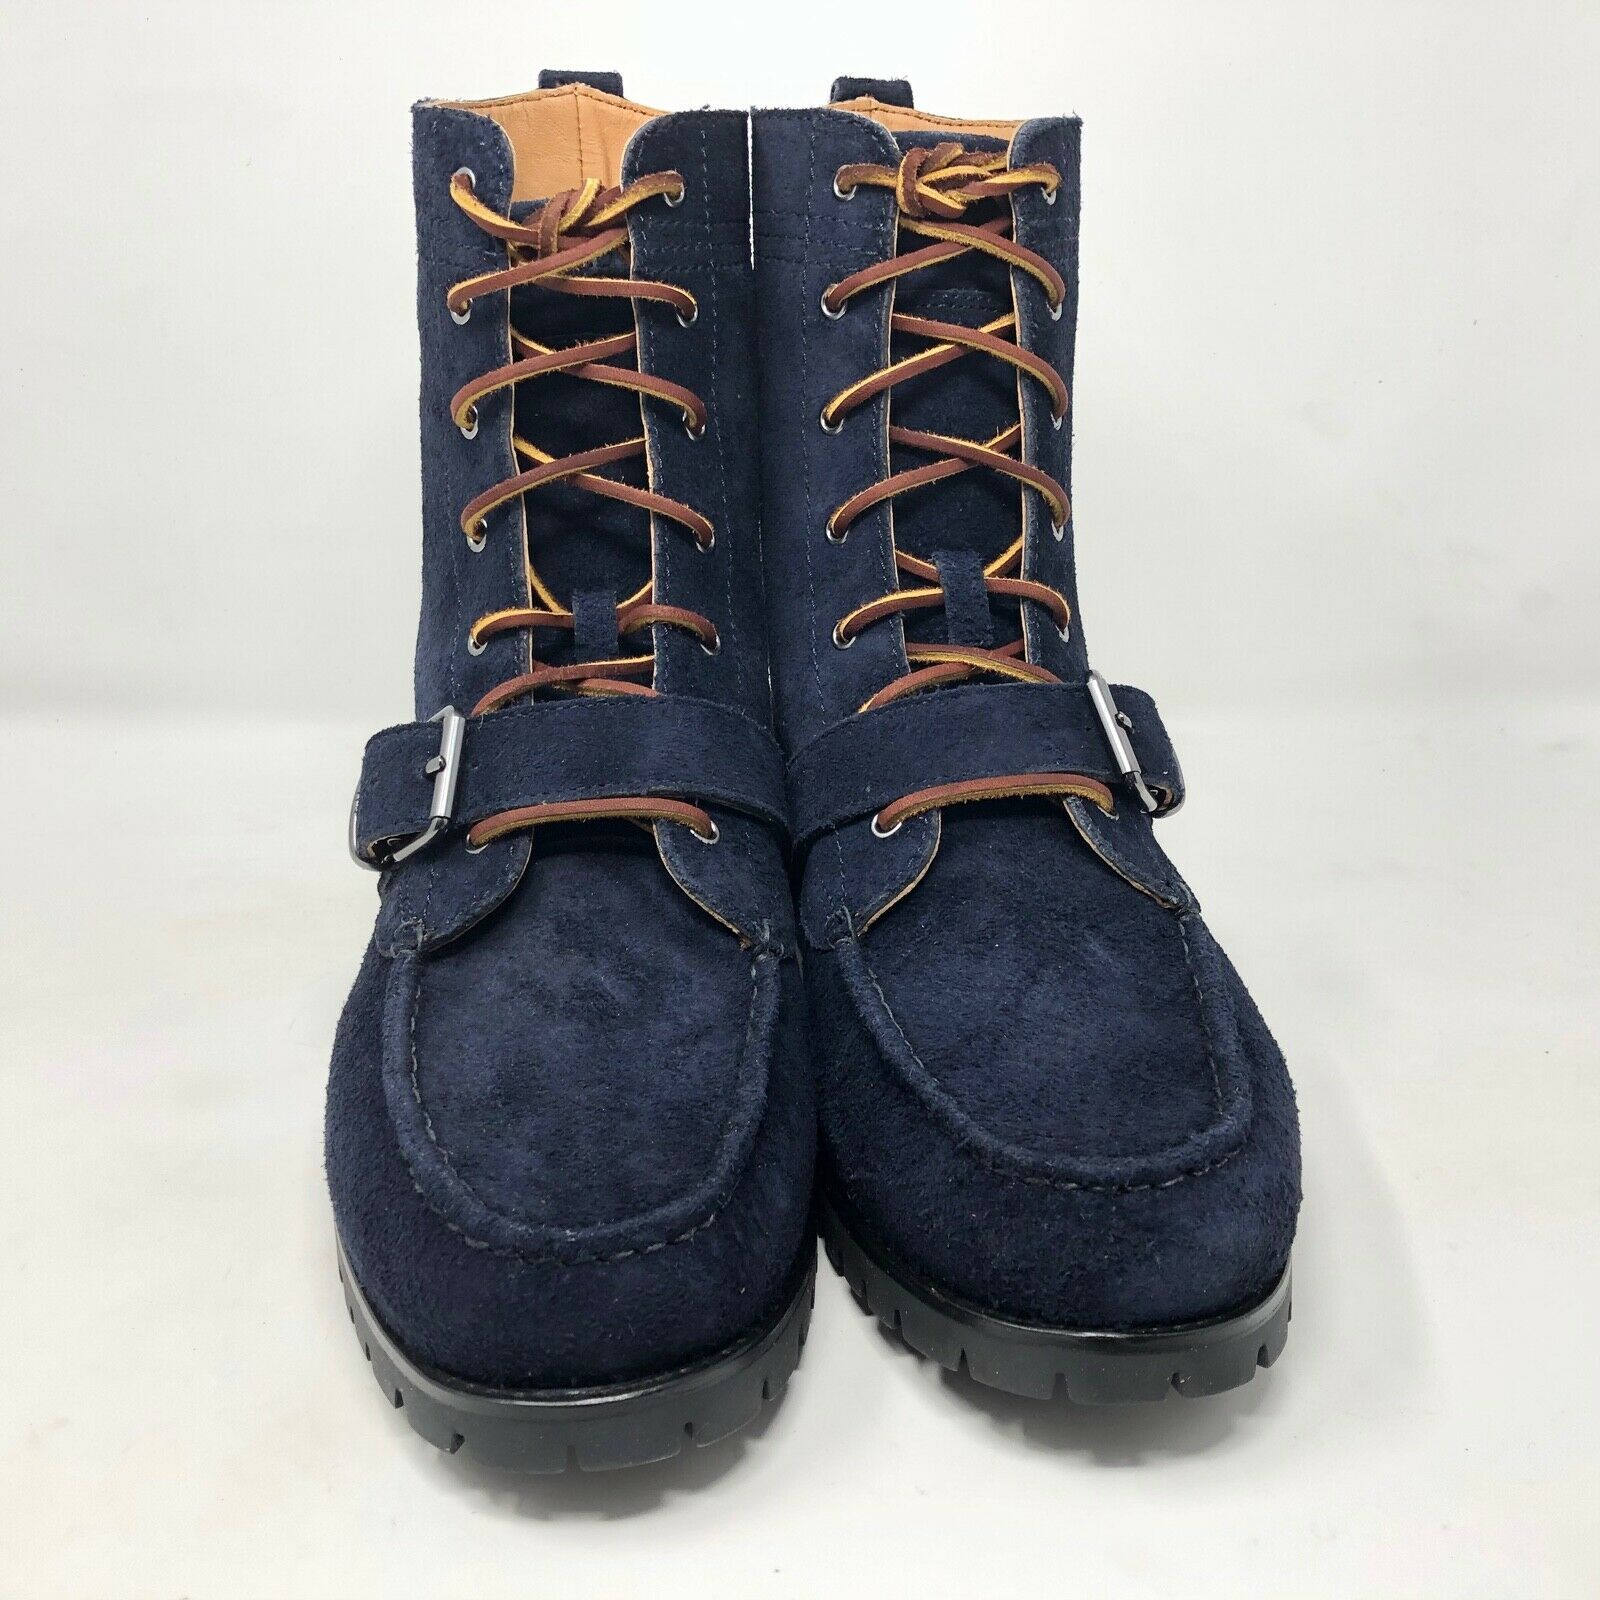 blue suede polo ranger boots